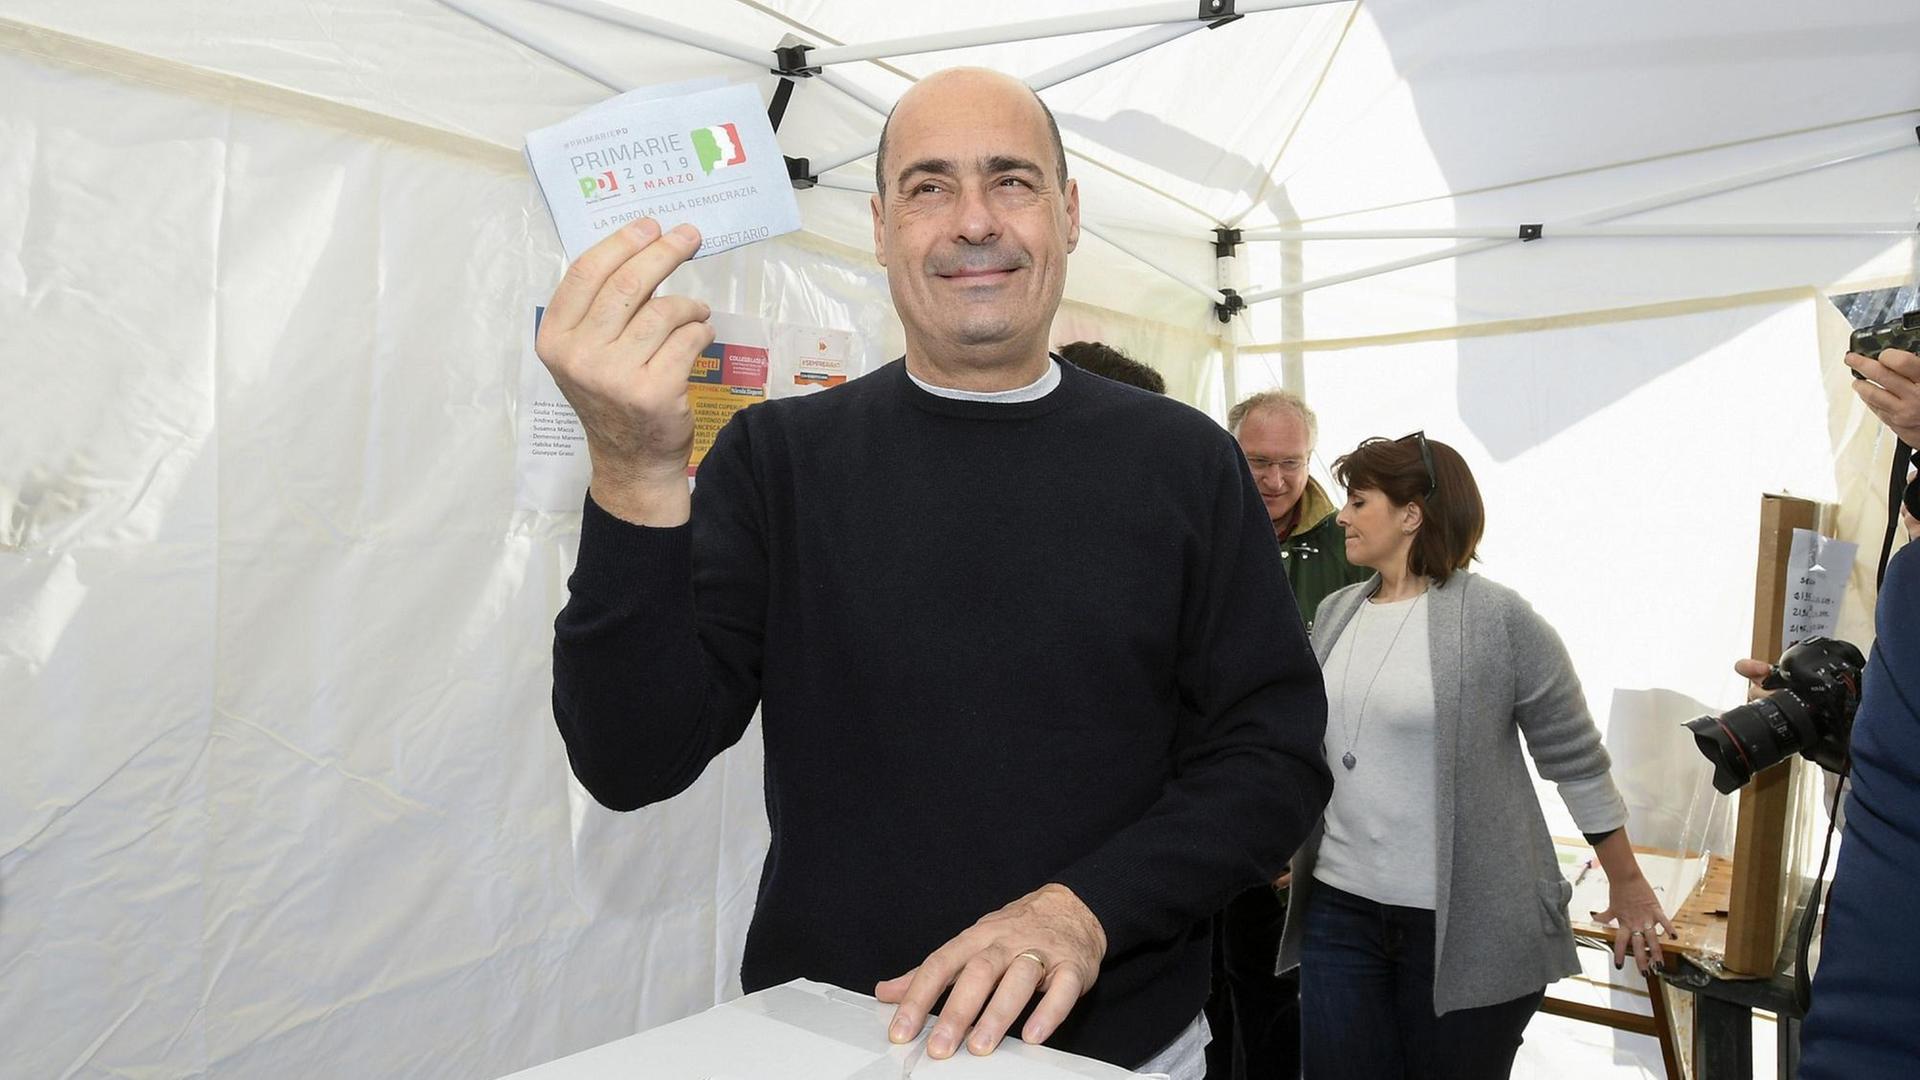 Parteiführer des Partito Democratico, Nicola Zingaretti, bei der Wahl am 3.3.2019 in Rom